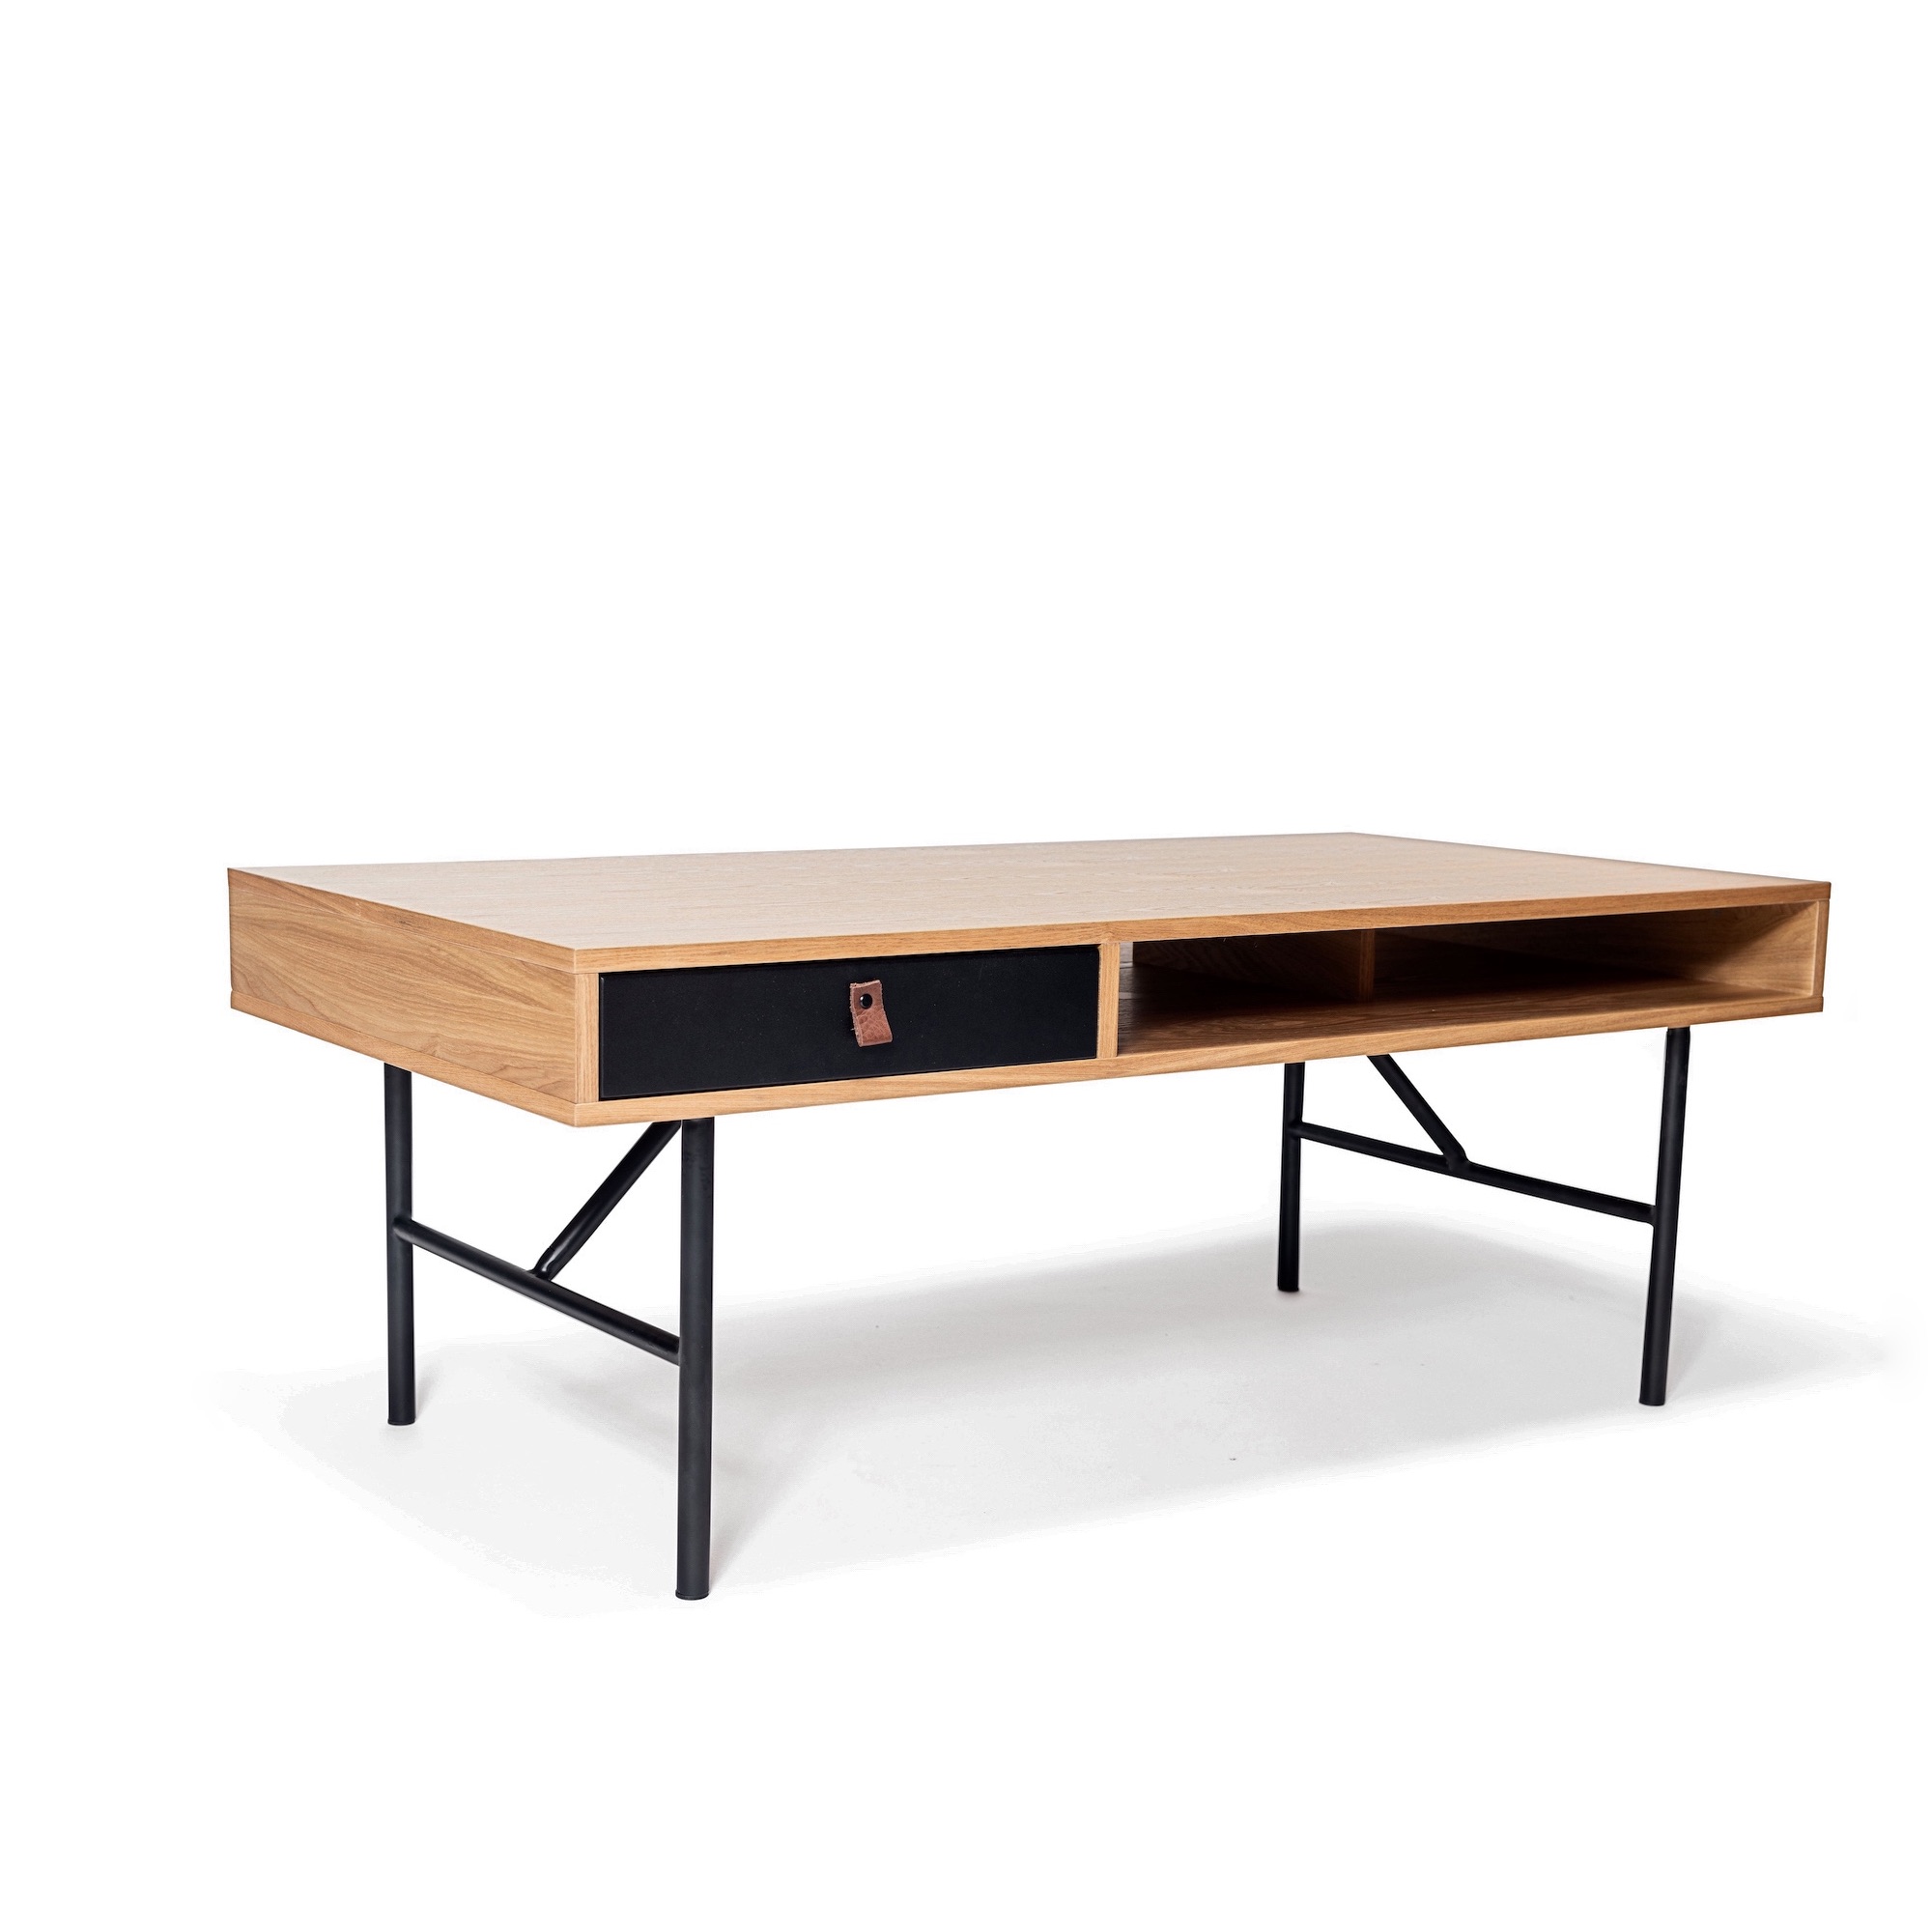 NJORDEC Kodiak sofabord, m. 1 rum og 1 skuffe - gylden asketræfinér og sort metal (117x60)